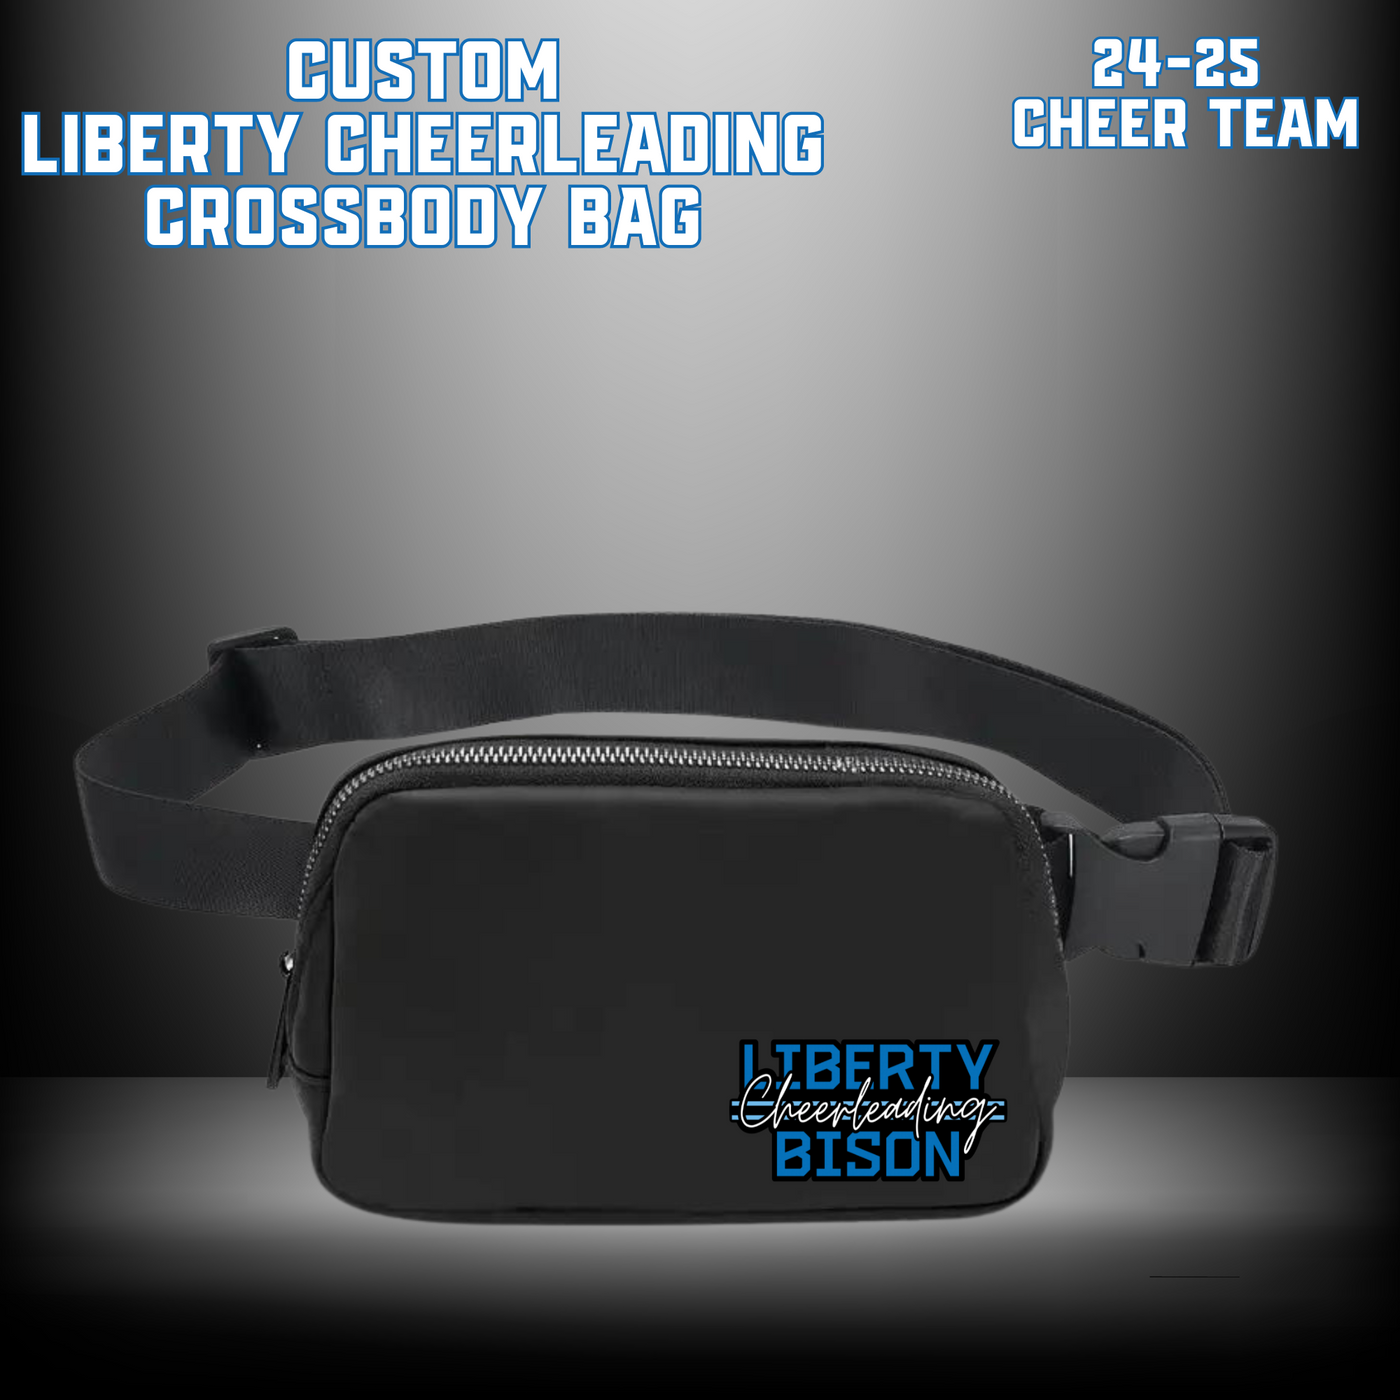 24-25 CHEER TEAM Liberty Cheer Belt Bag (Crossbody Bag)